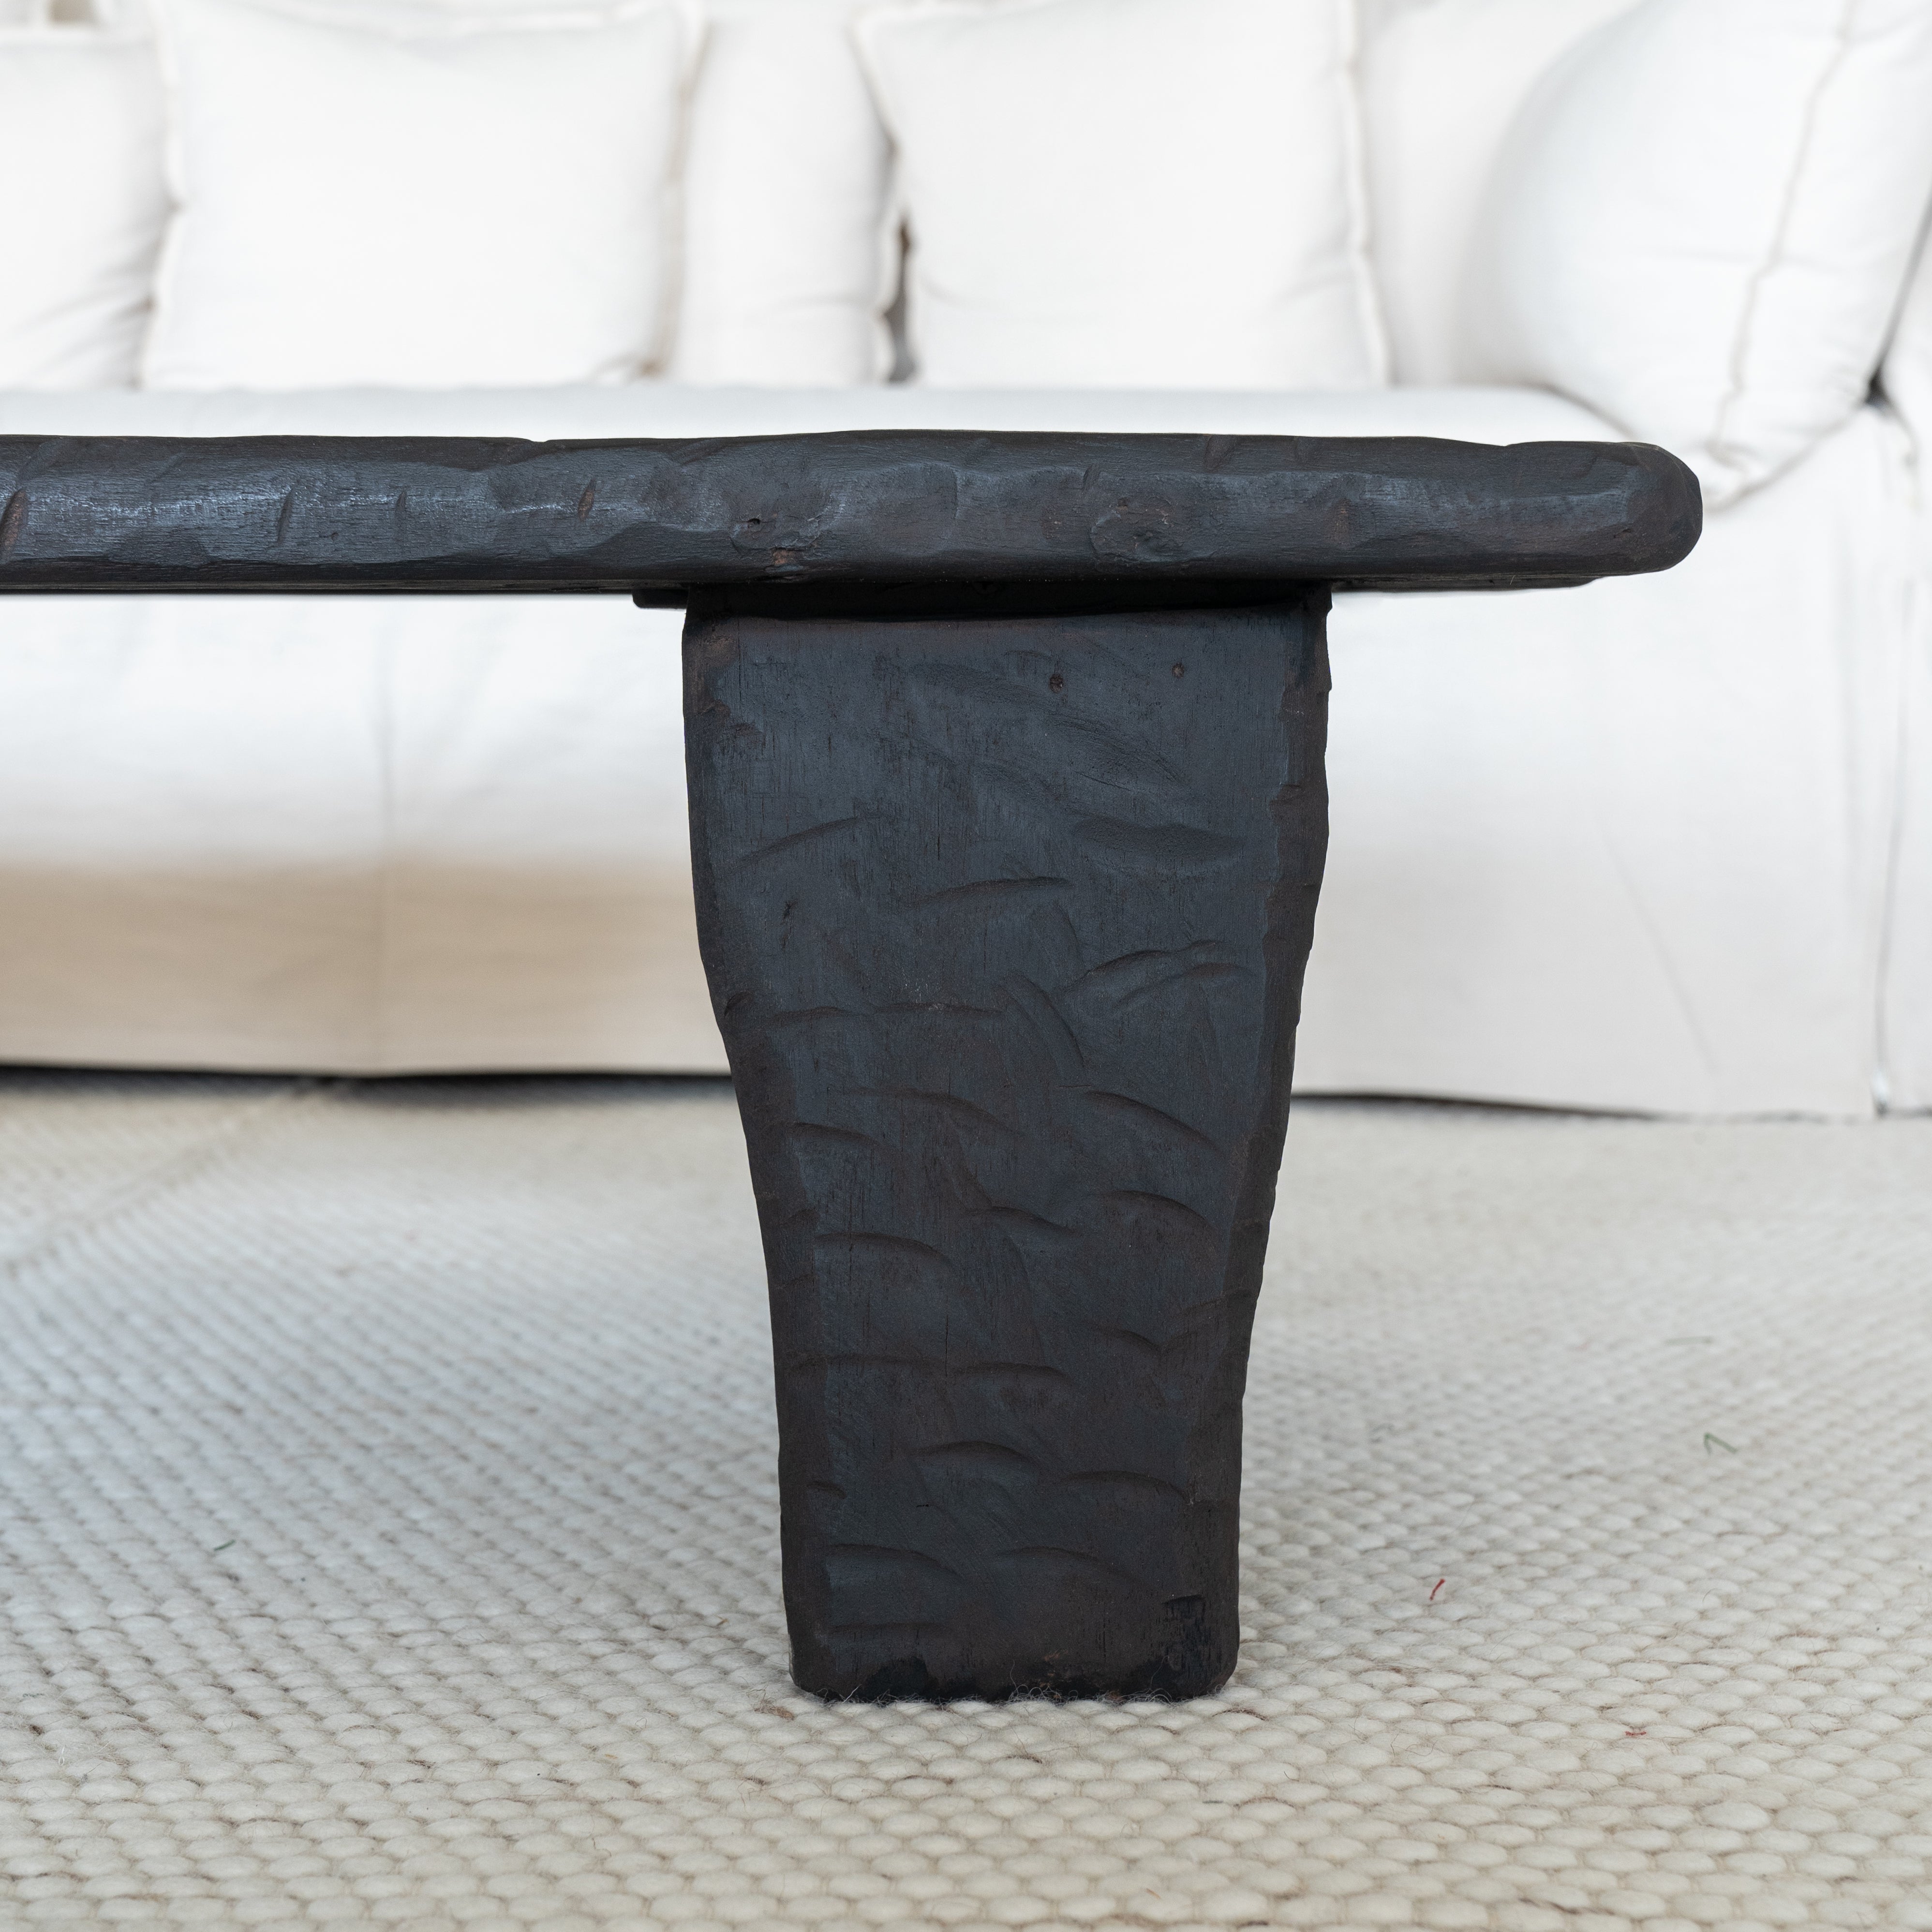 Maddox Coffee Table  - WS Living - UAE - Coffee Table Wood and steel Furnitures - Dubai